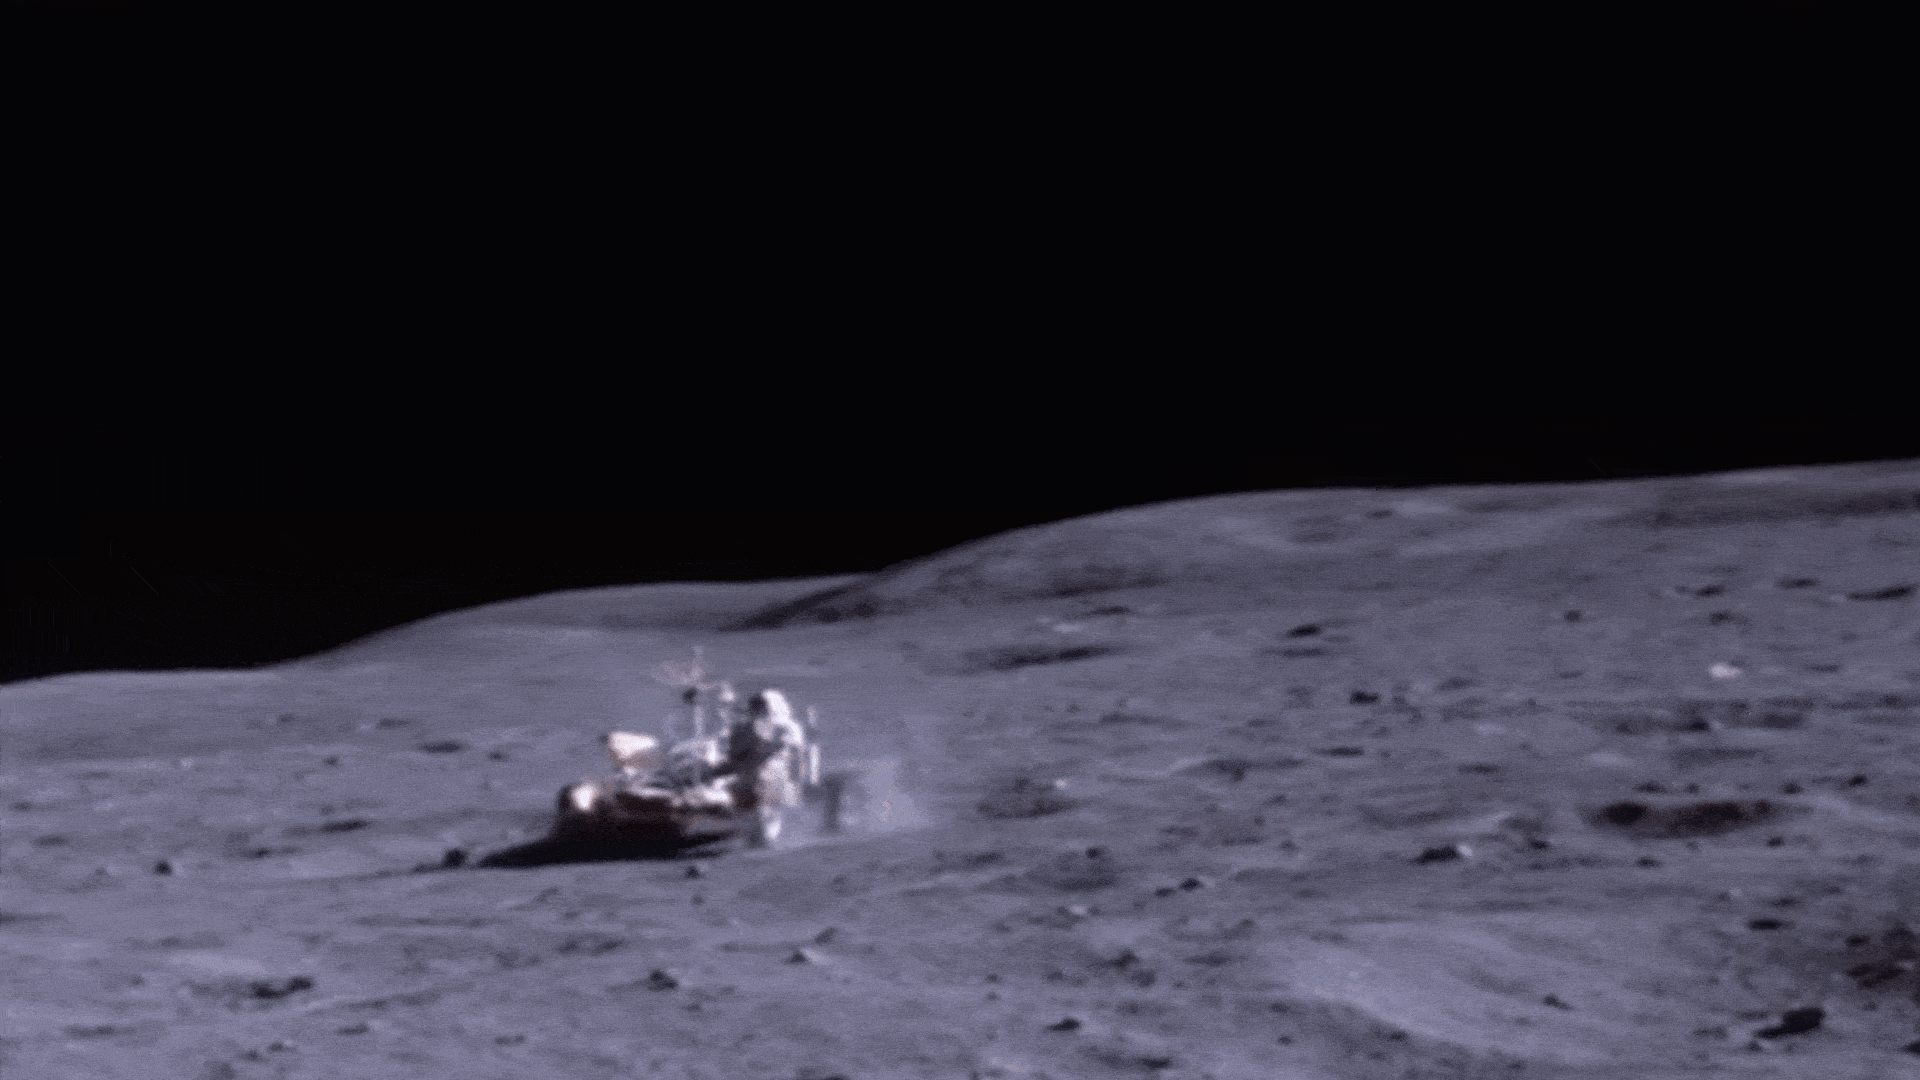 Apollo 16 astronaut John Young drives NASA's Lunar Roving Vehicle (LRV) at the Descartes landing site on the Moon on April 21, 1972.